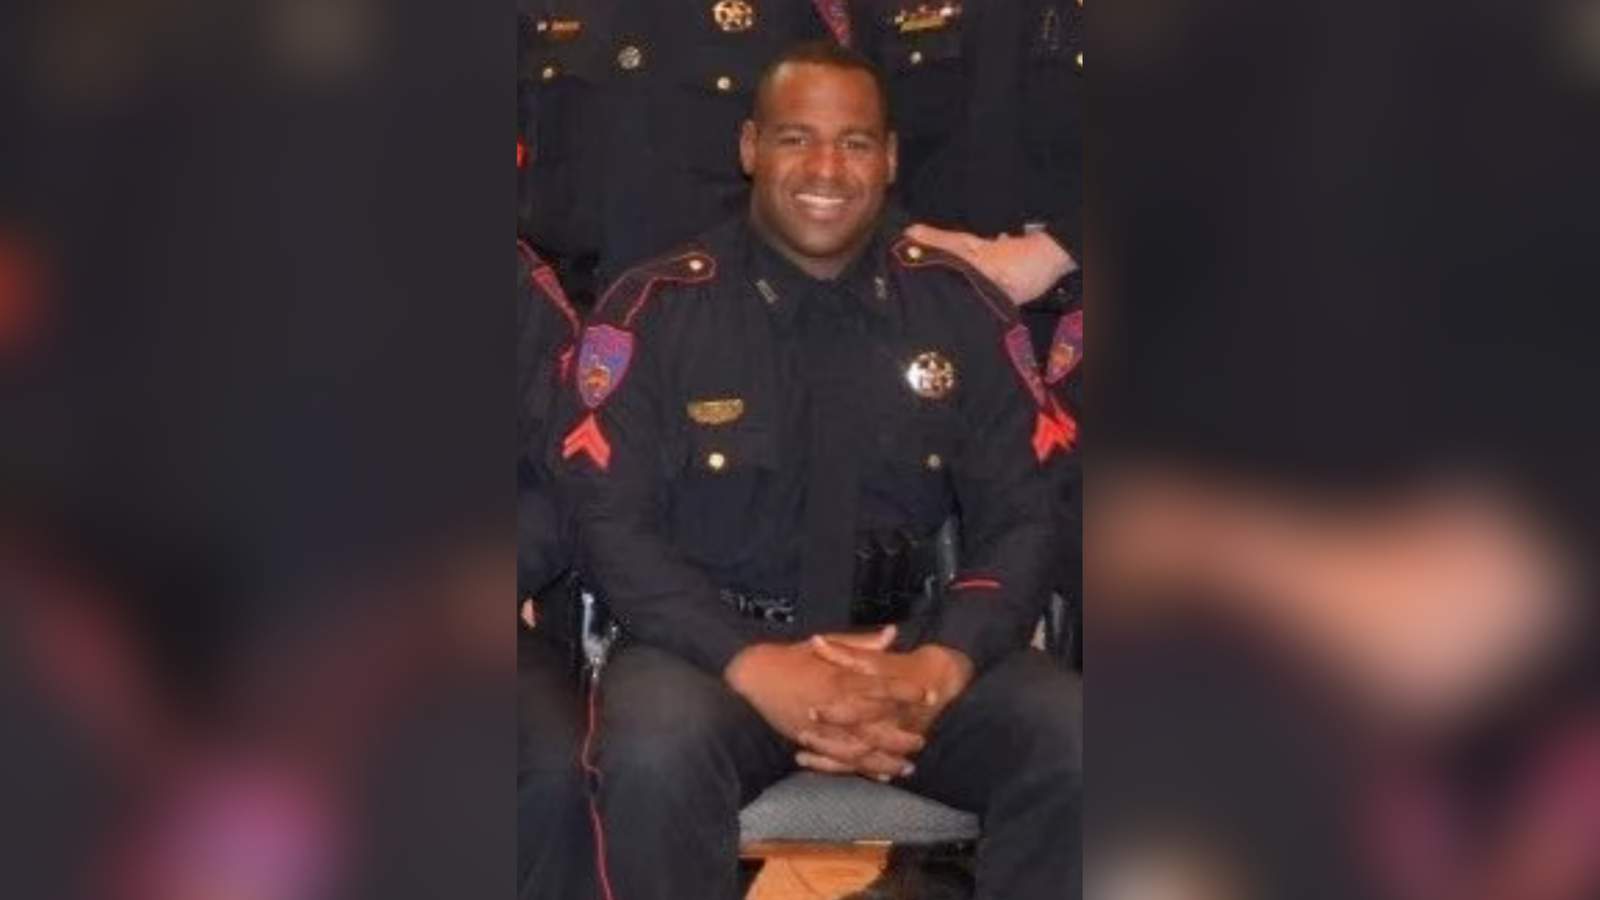 Harris County Precinct 4 constable sergeant dies after single-vehicle crash